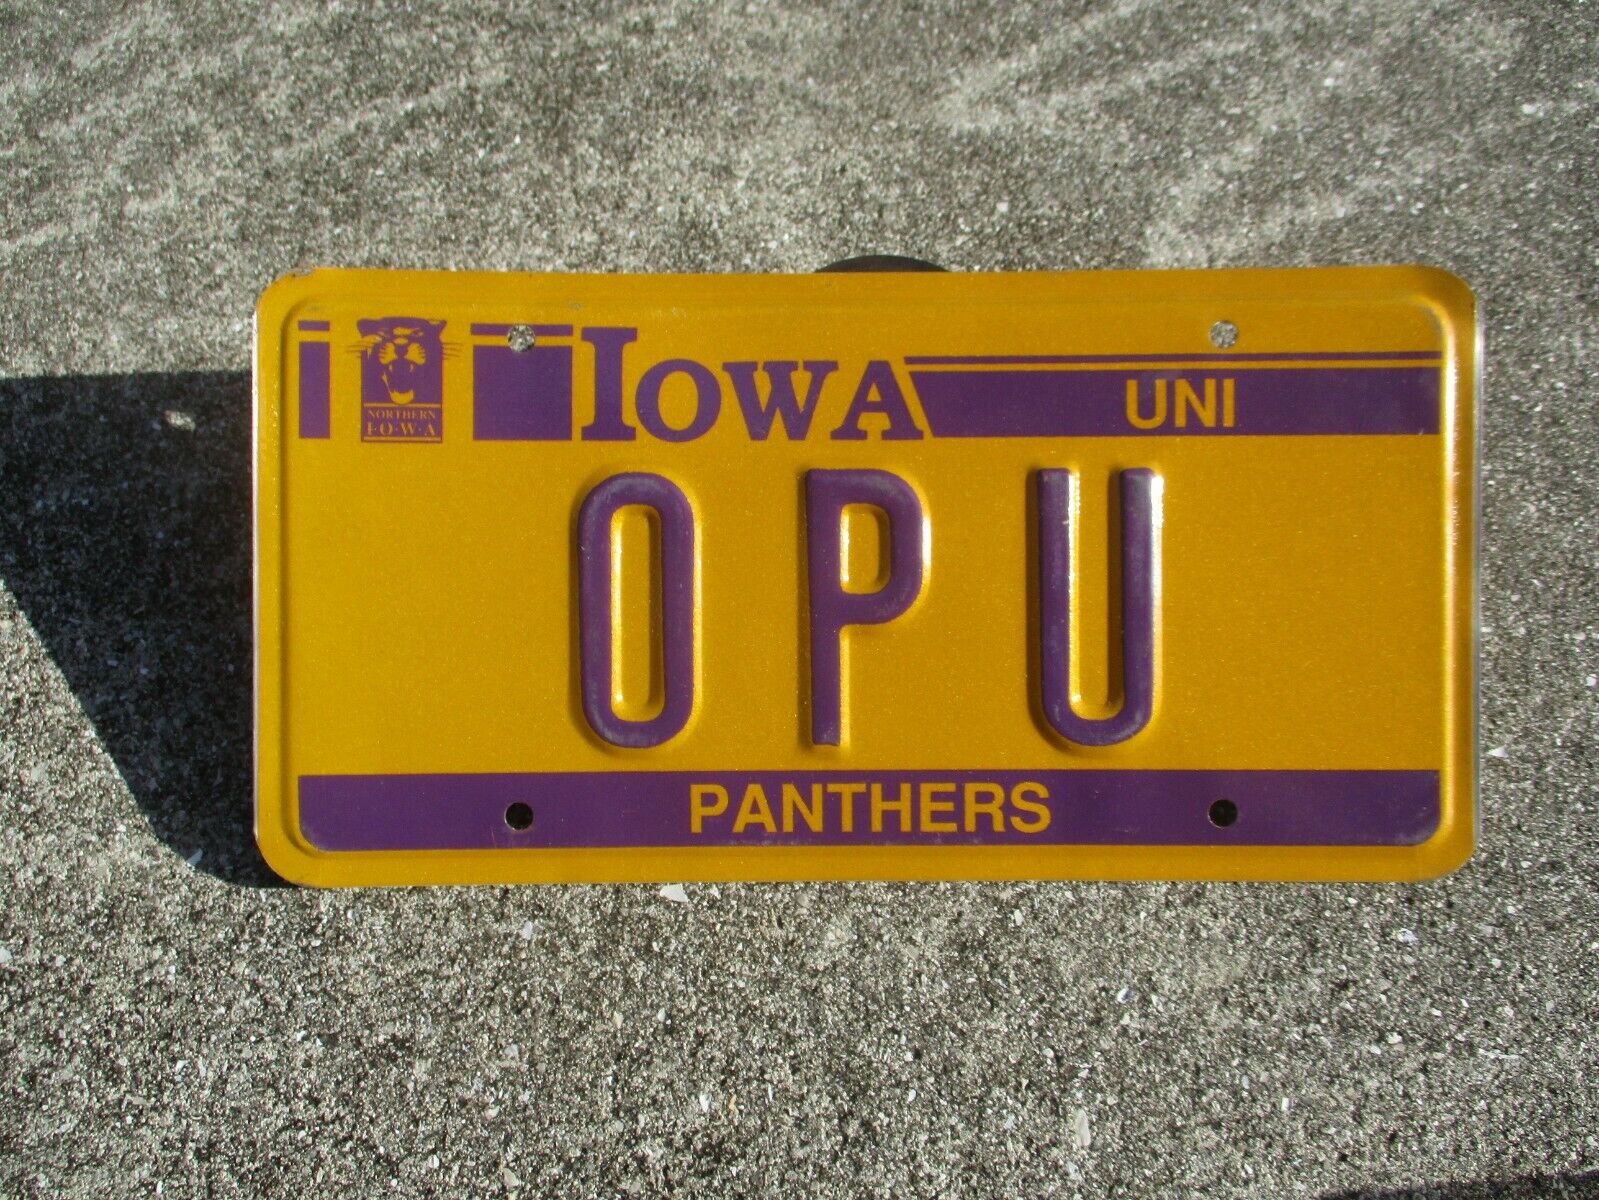 Iowa UNI Panthers vanity license plate  #   O  P  U